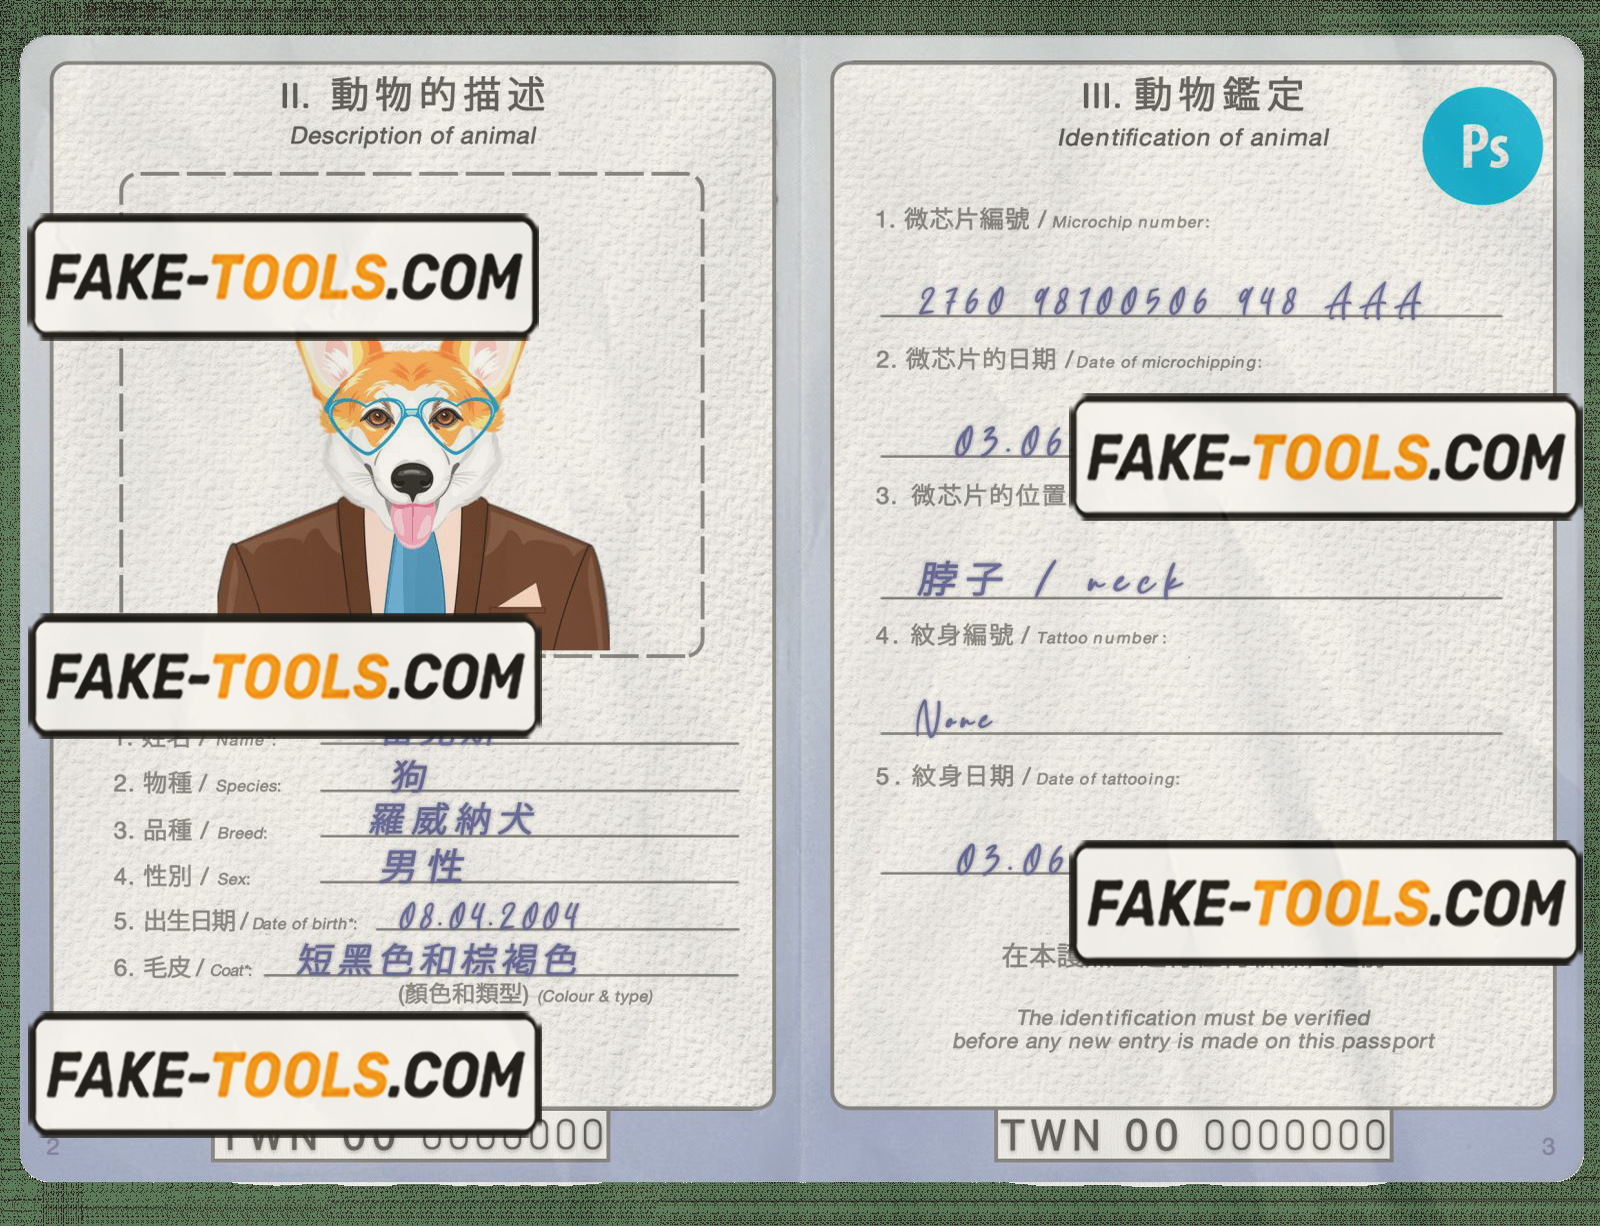 Taiwan dog (animal, pet) passport PSD template, fully editable scan effect